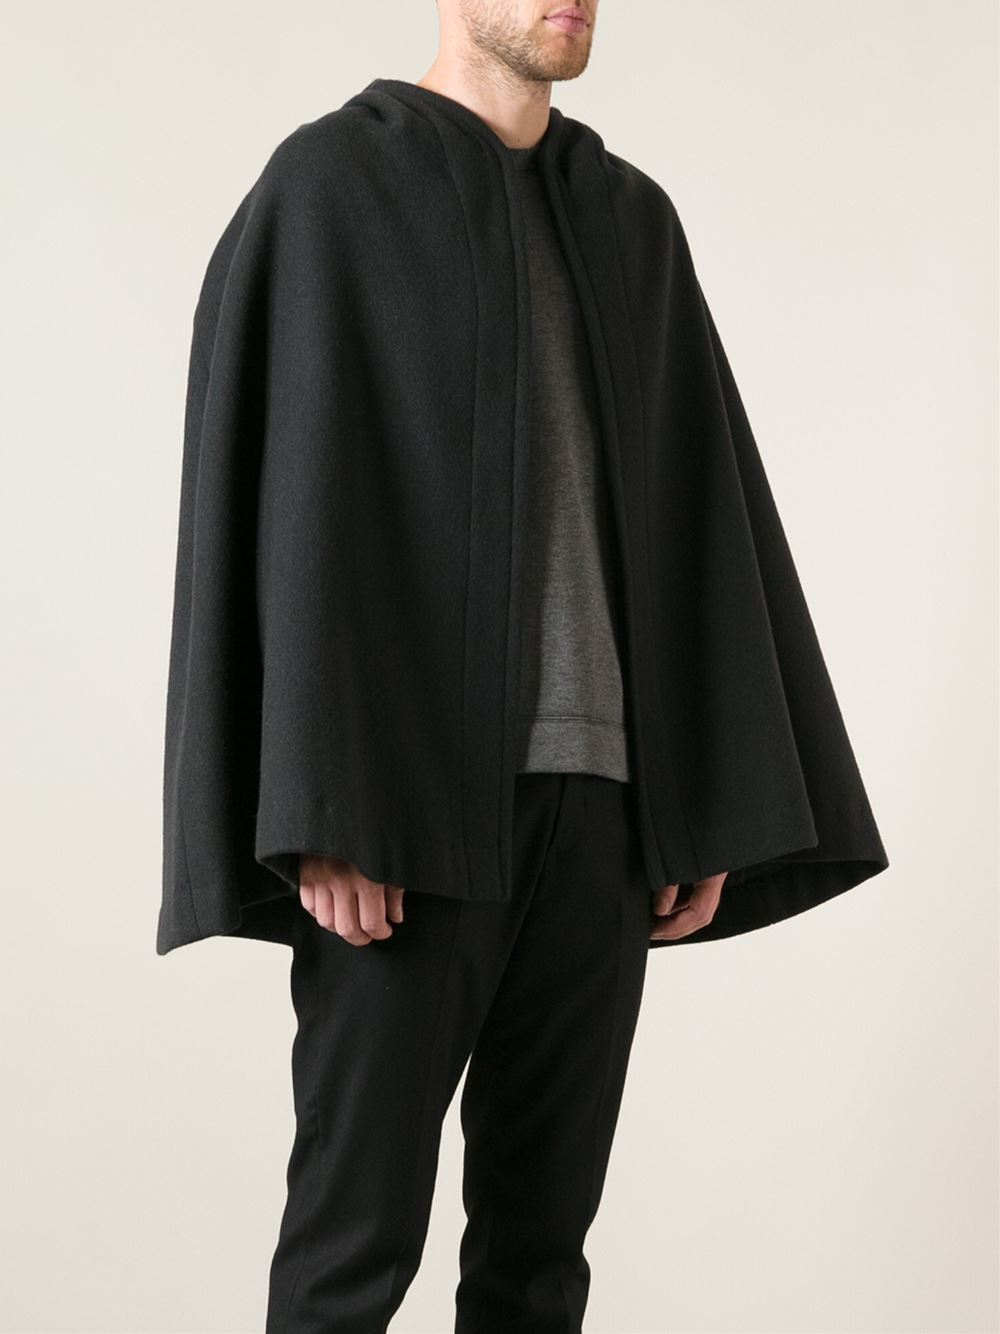 Lyst - Dolce & Gabbana Cape Coat in Black for Men